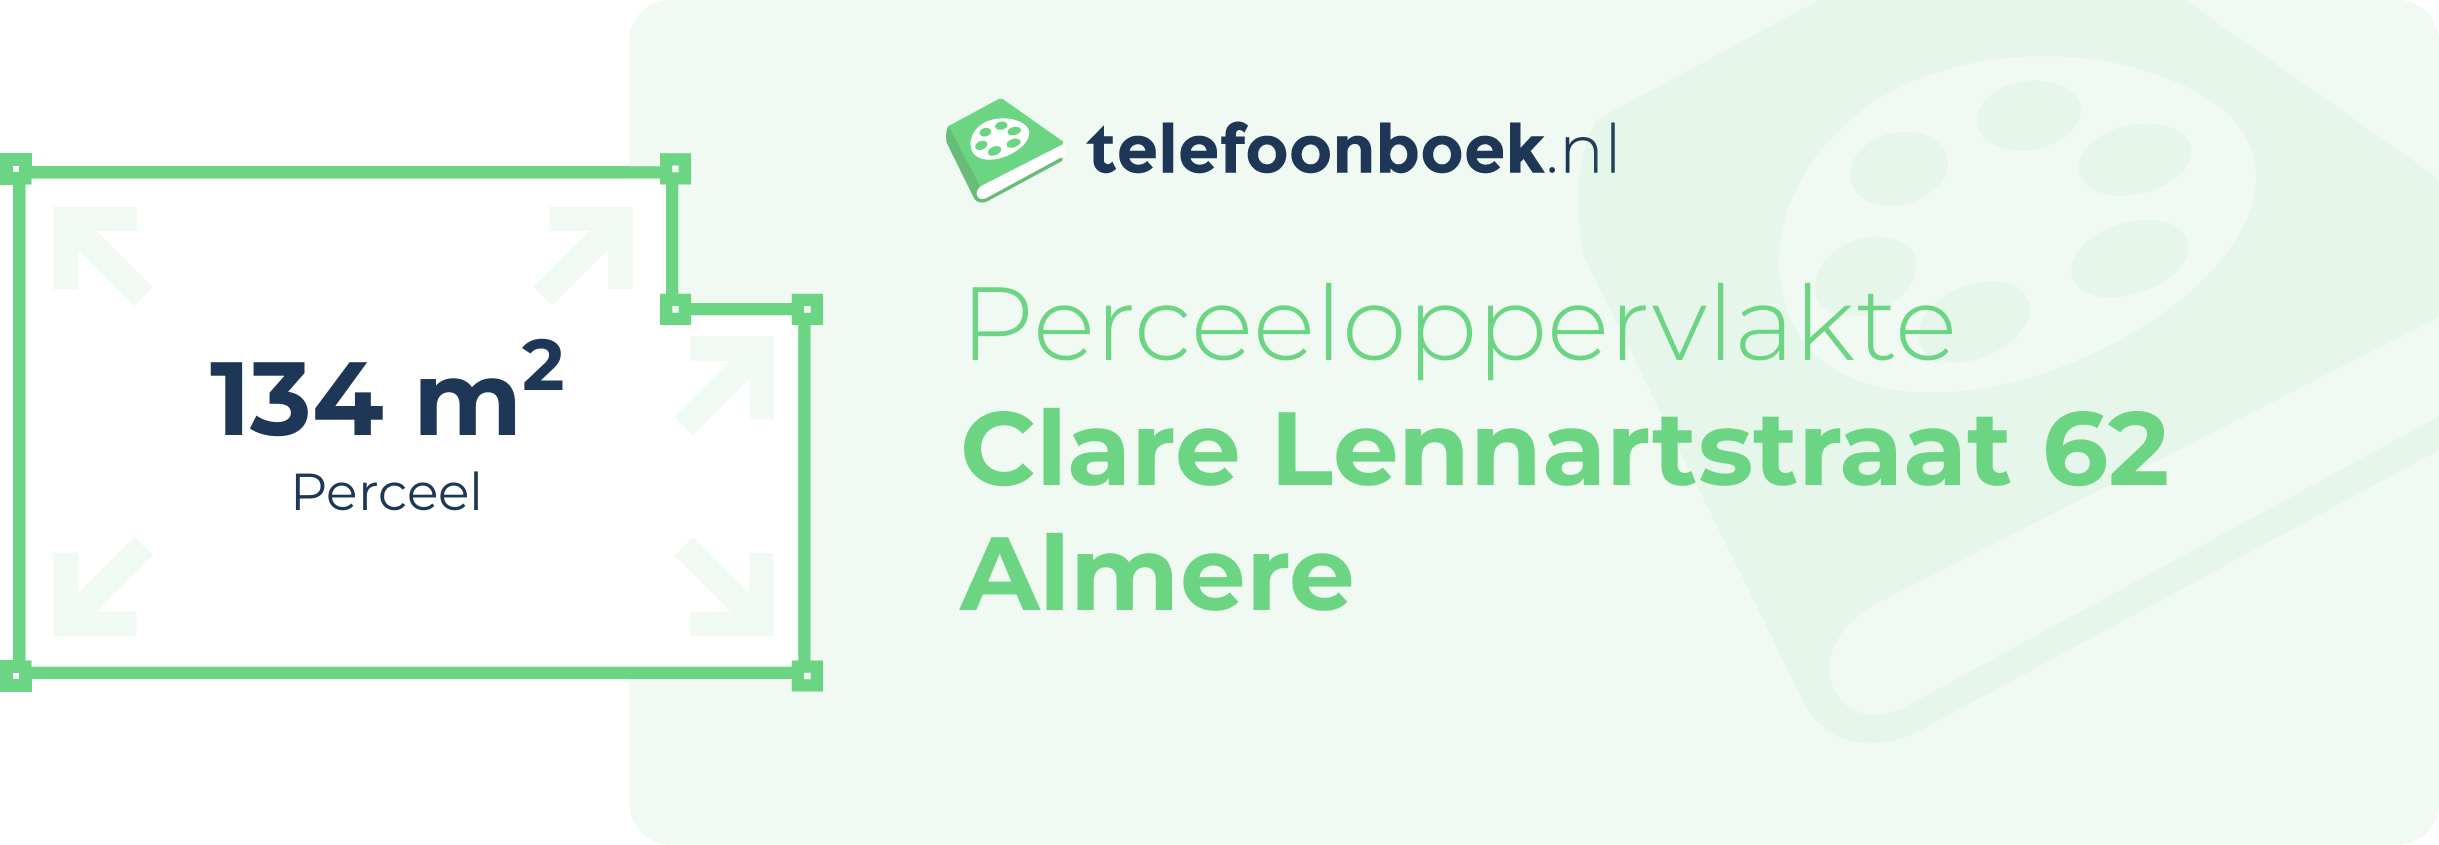 Perceeloppervlakte Clare Lennartstraat 62 Almere